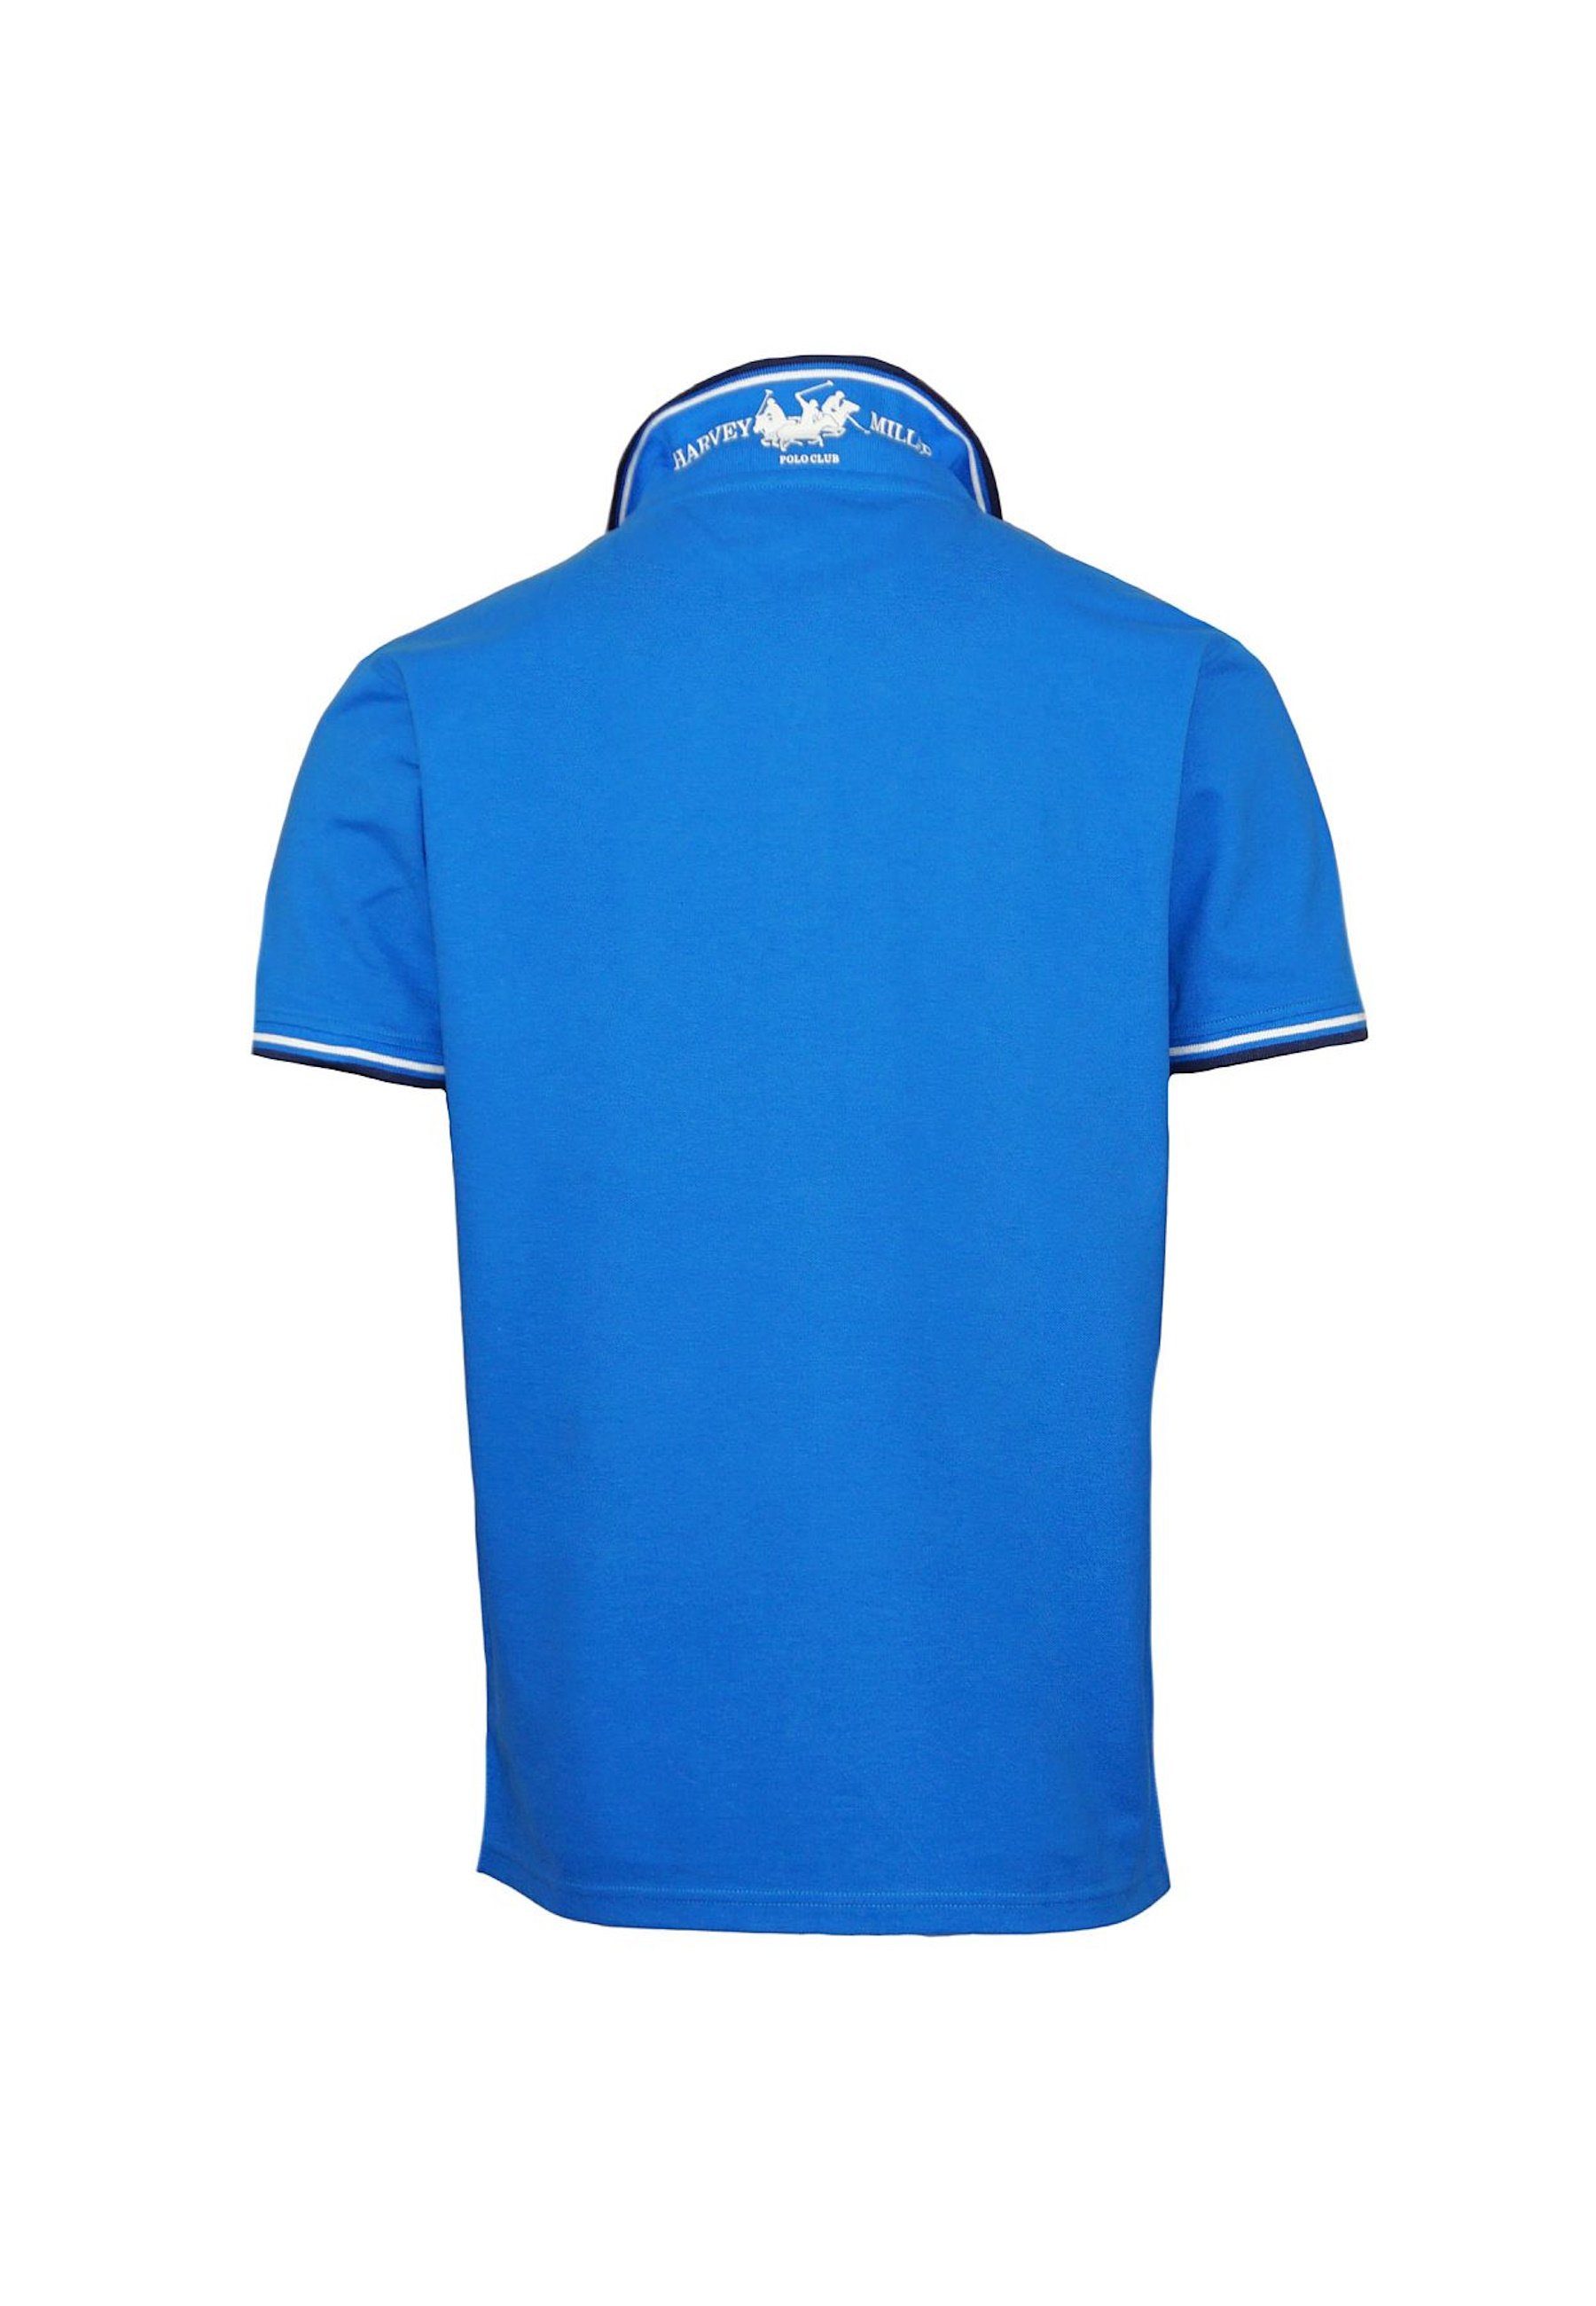 Miller Fashion blau Harvey Kurzarm Shirt Polohemd Poloshirt Polo Poloshirt